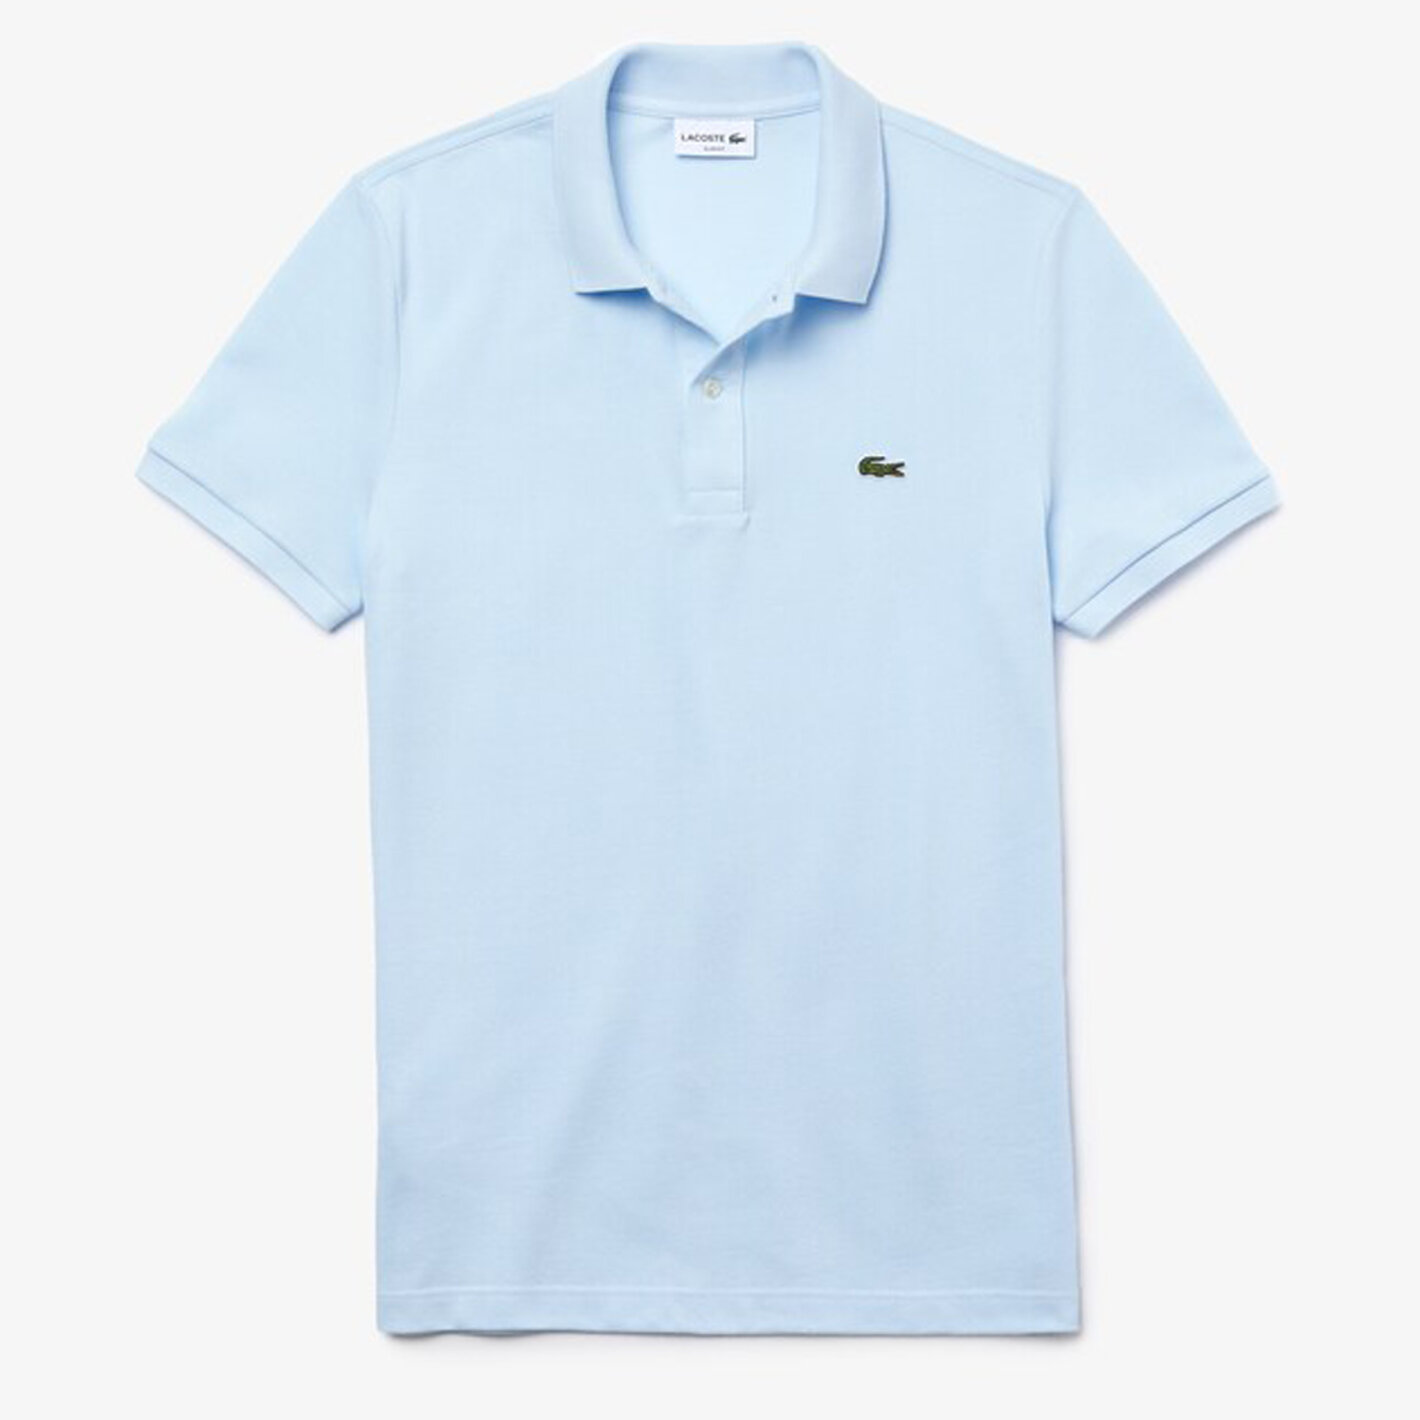 Shop nu Lacoste PH4012 Polo T-shirt i Lys blå - Fri